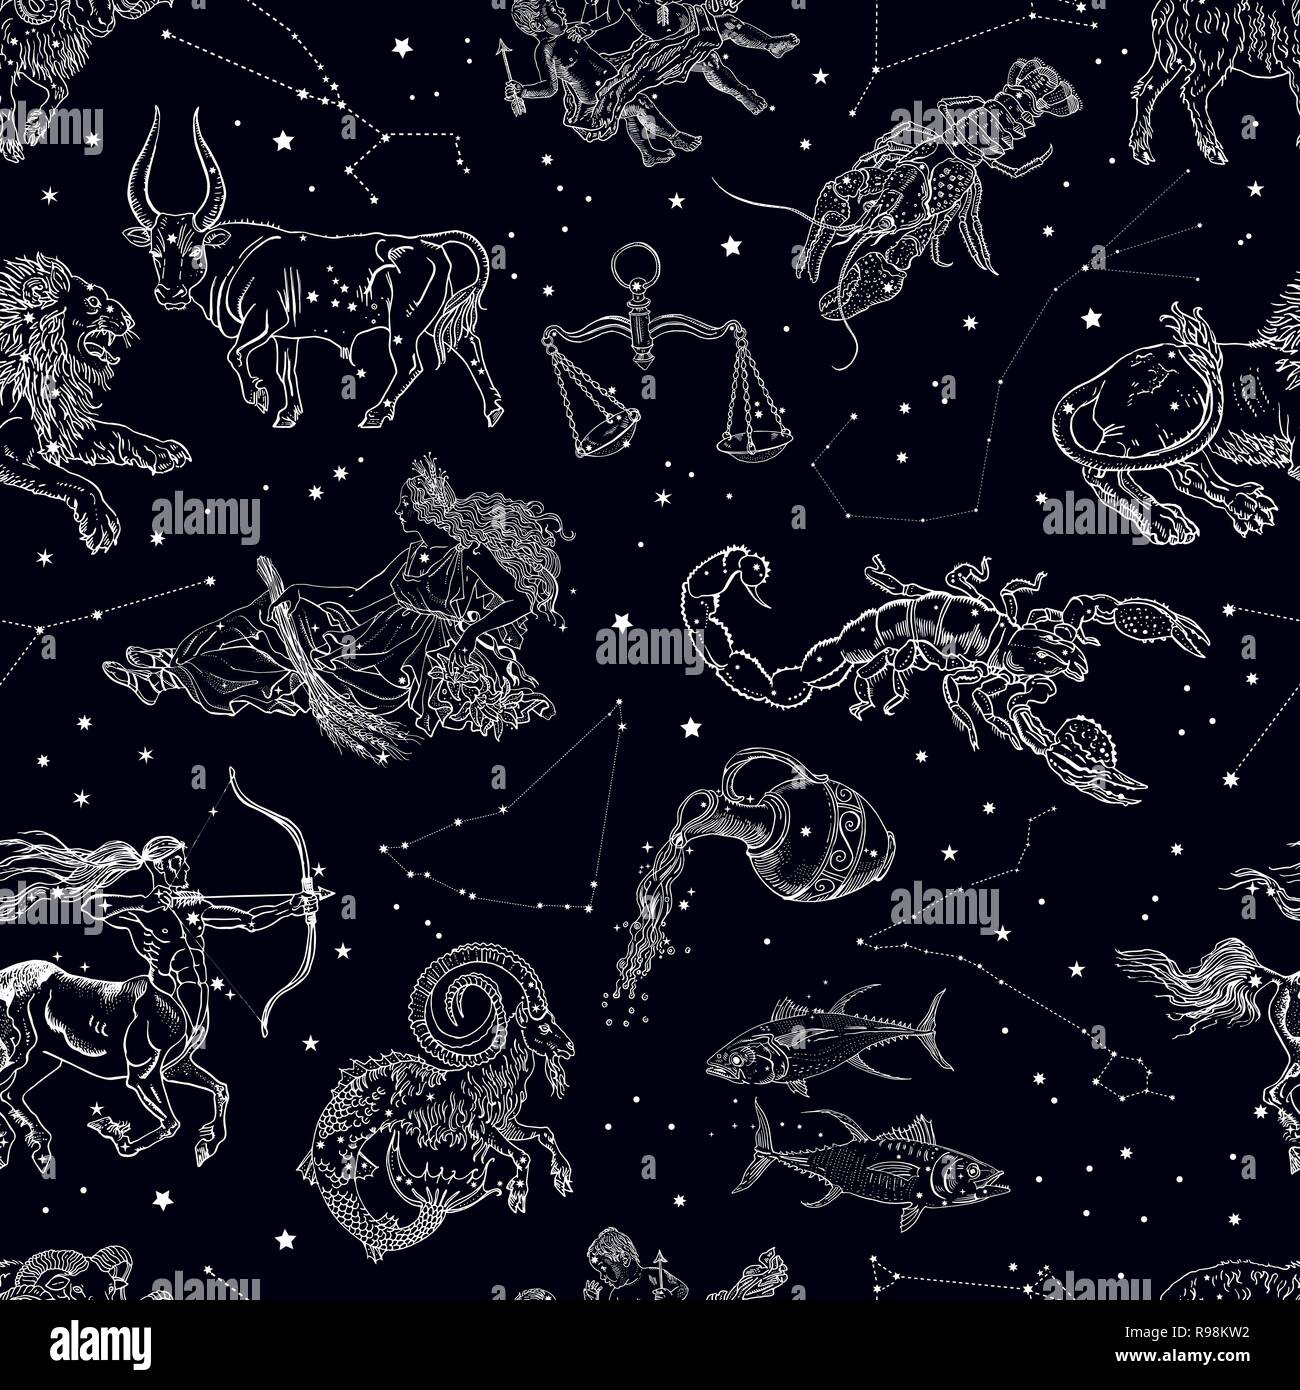 Zodiac signs, constellations and stars seamless pattern. Aries, Taurus, Gemini, Cancer, Leo, Virgo, Libra, Scorpio, Sagittarius, Capricorn, Aquarius,  Stock Vector